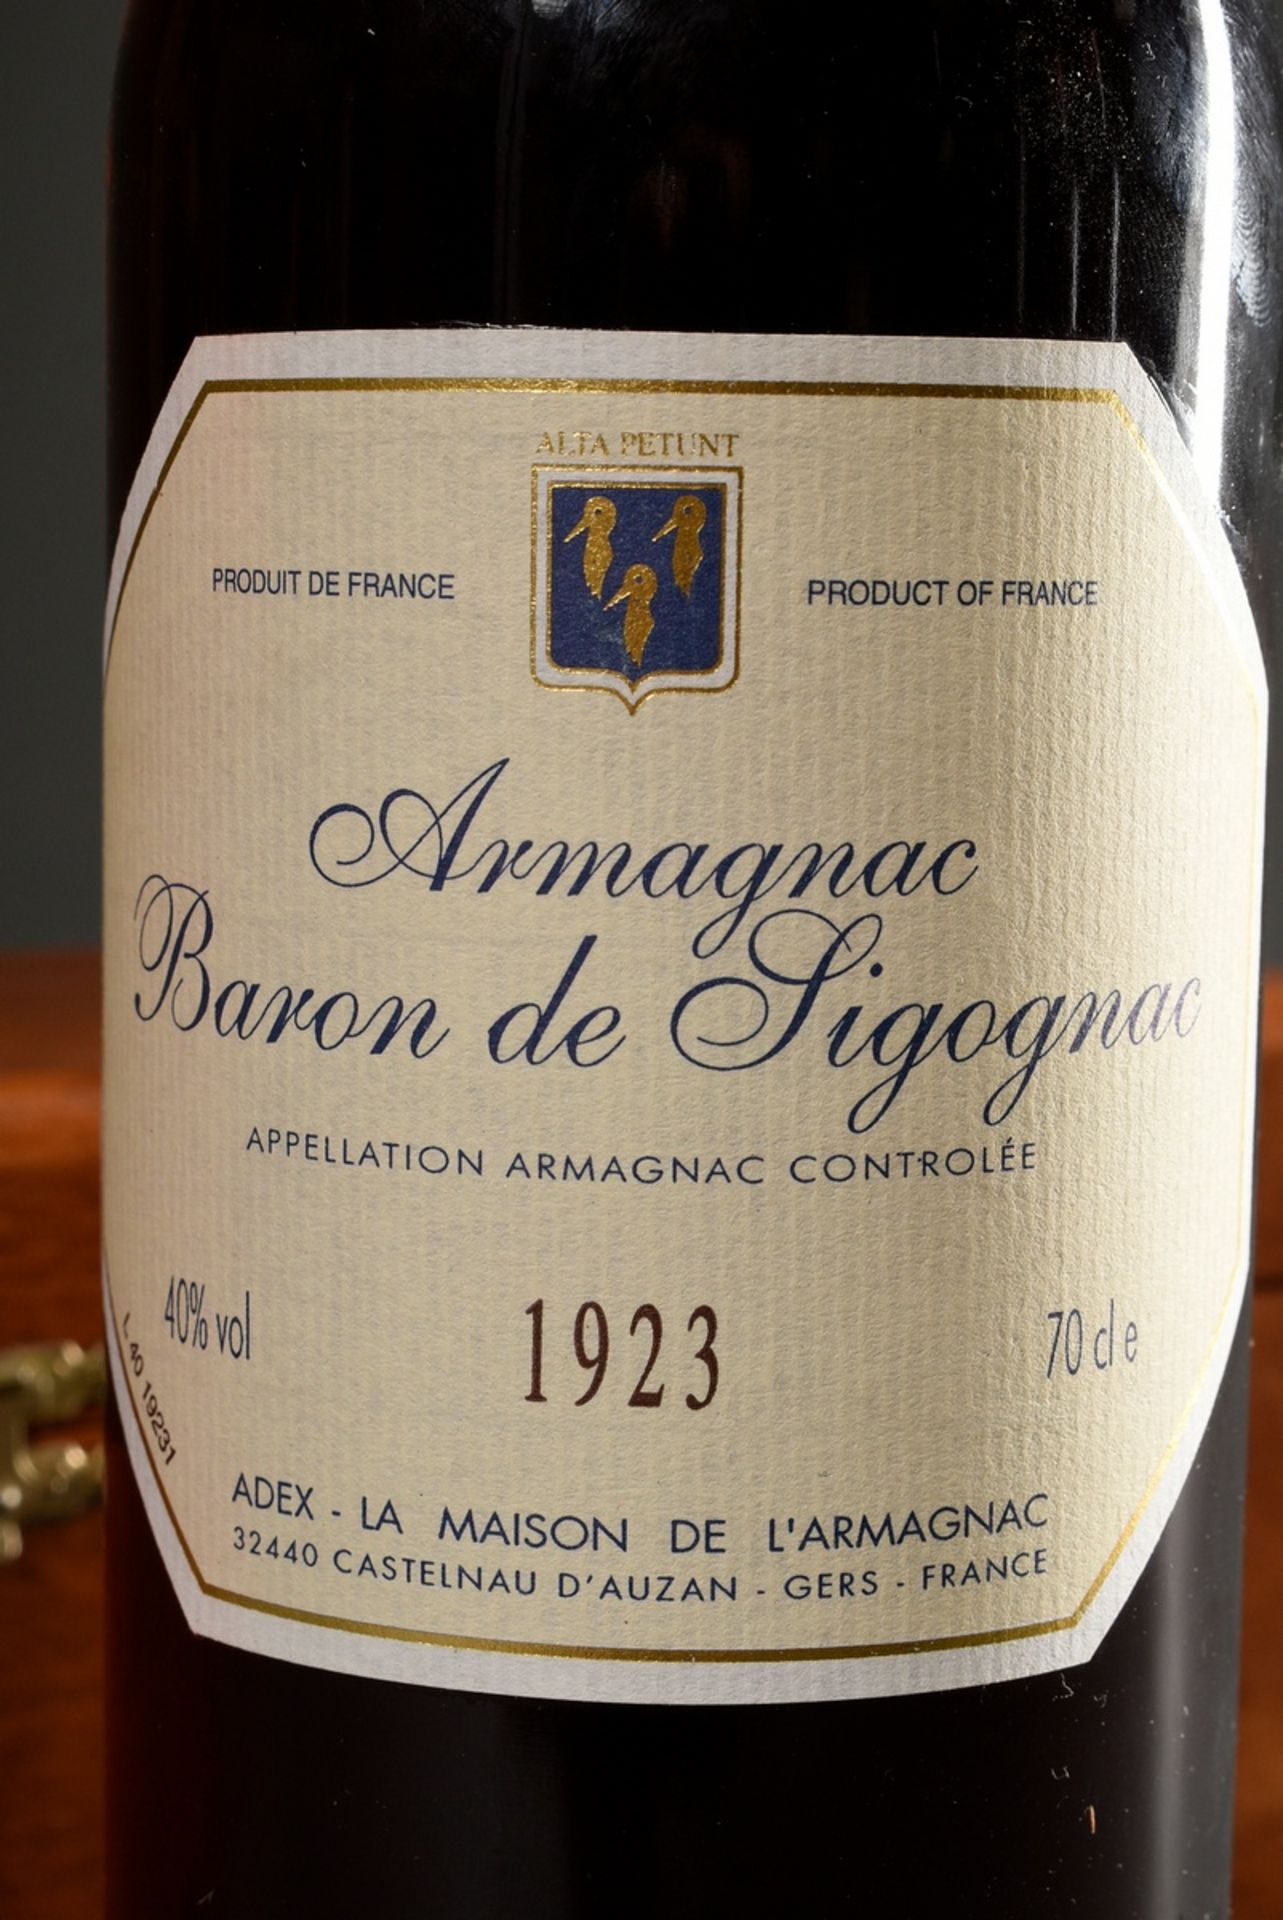 Bottle of Armagnac "Baron de Sigognac" 1923, in original wooden box with brass label, Gers, France, - Image 2 of 7